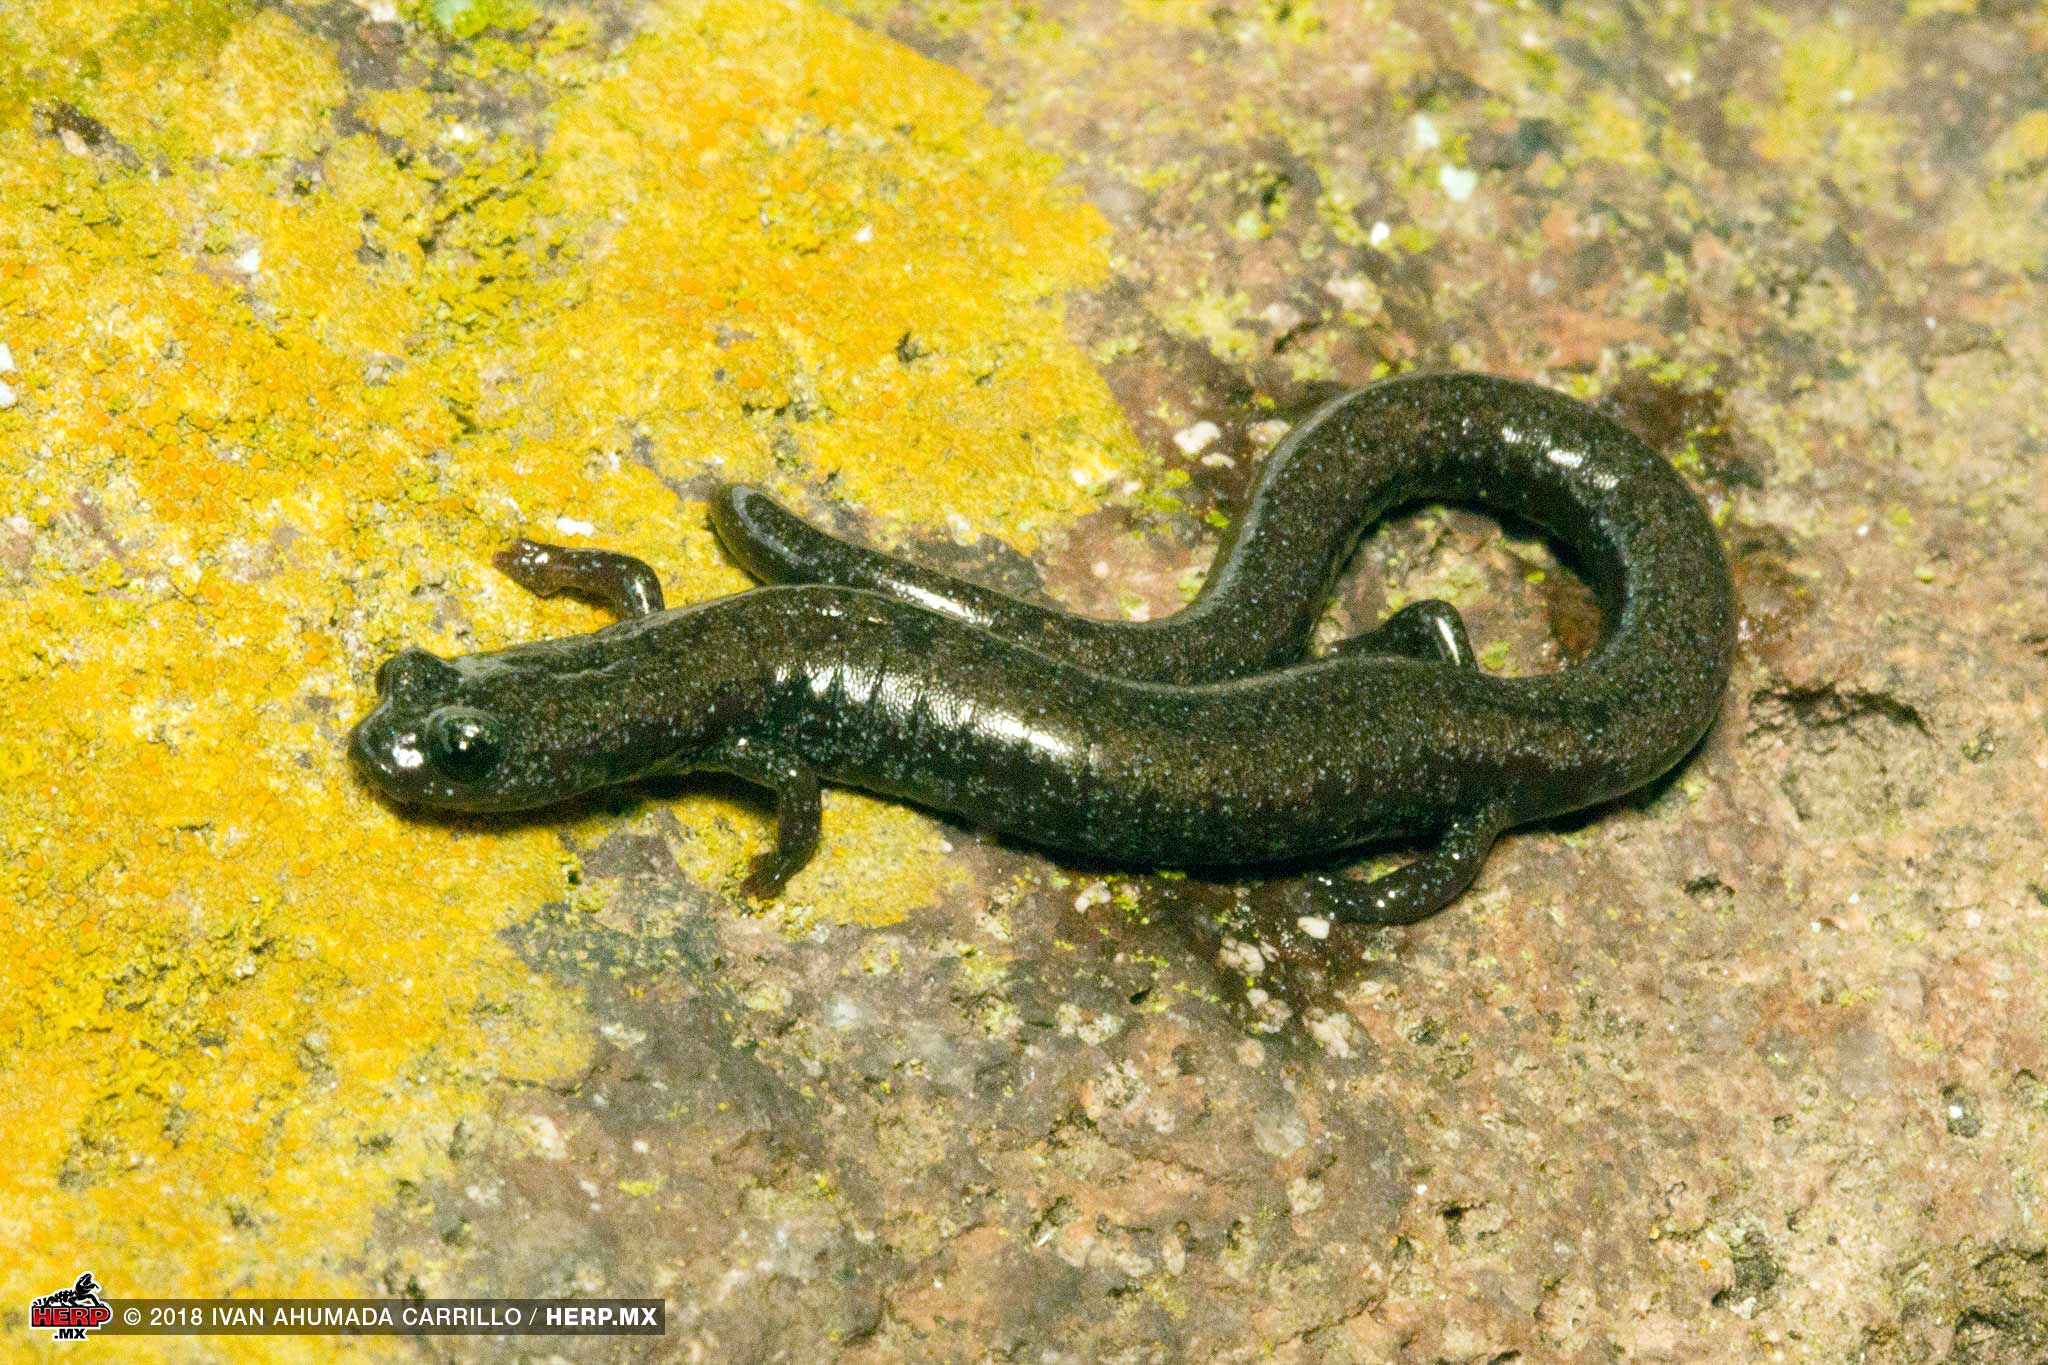 Garden Slender Salamander (<em>Batrachoseps major</em>)<br />© Ivan Ahumada Carrillo / HERP.MX